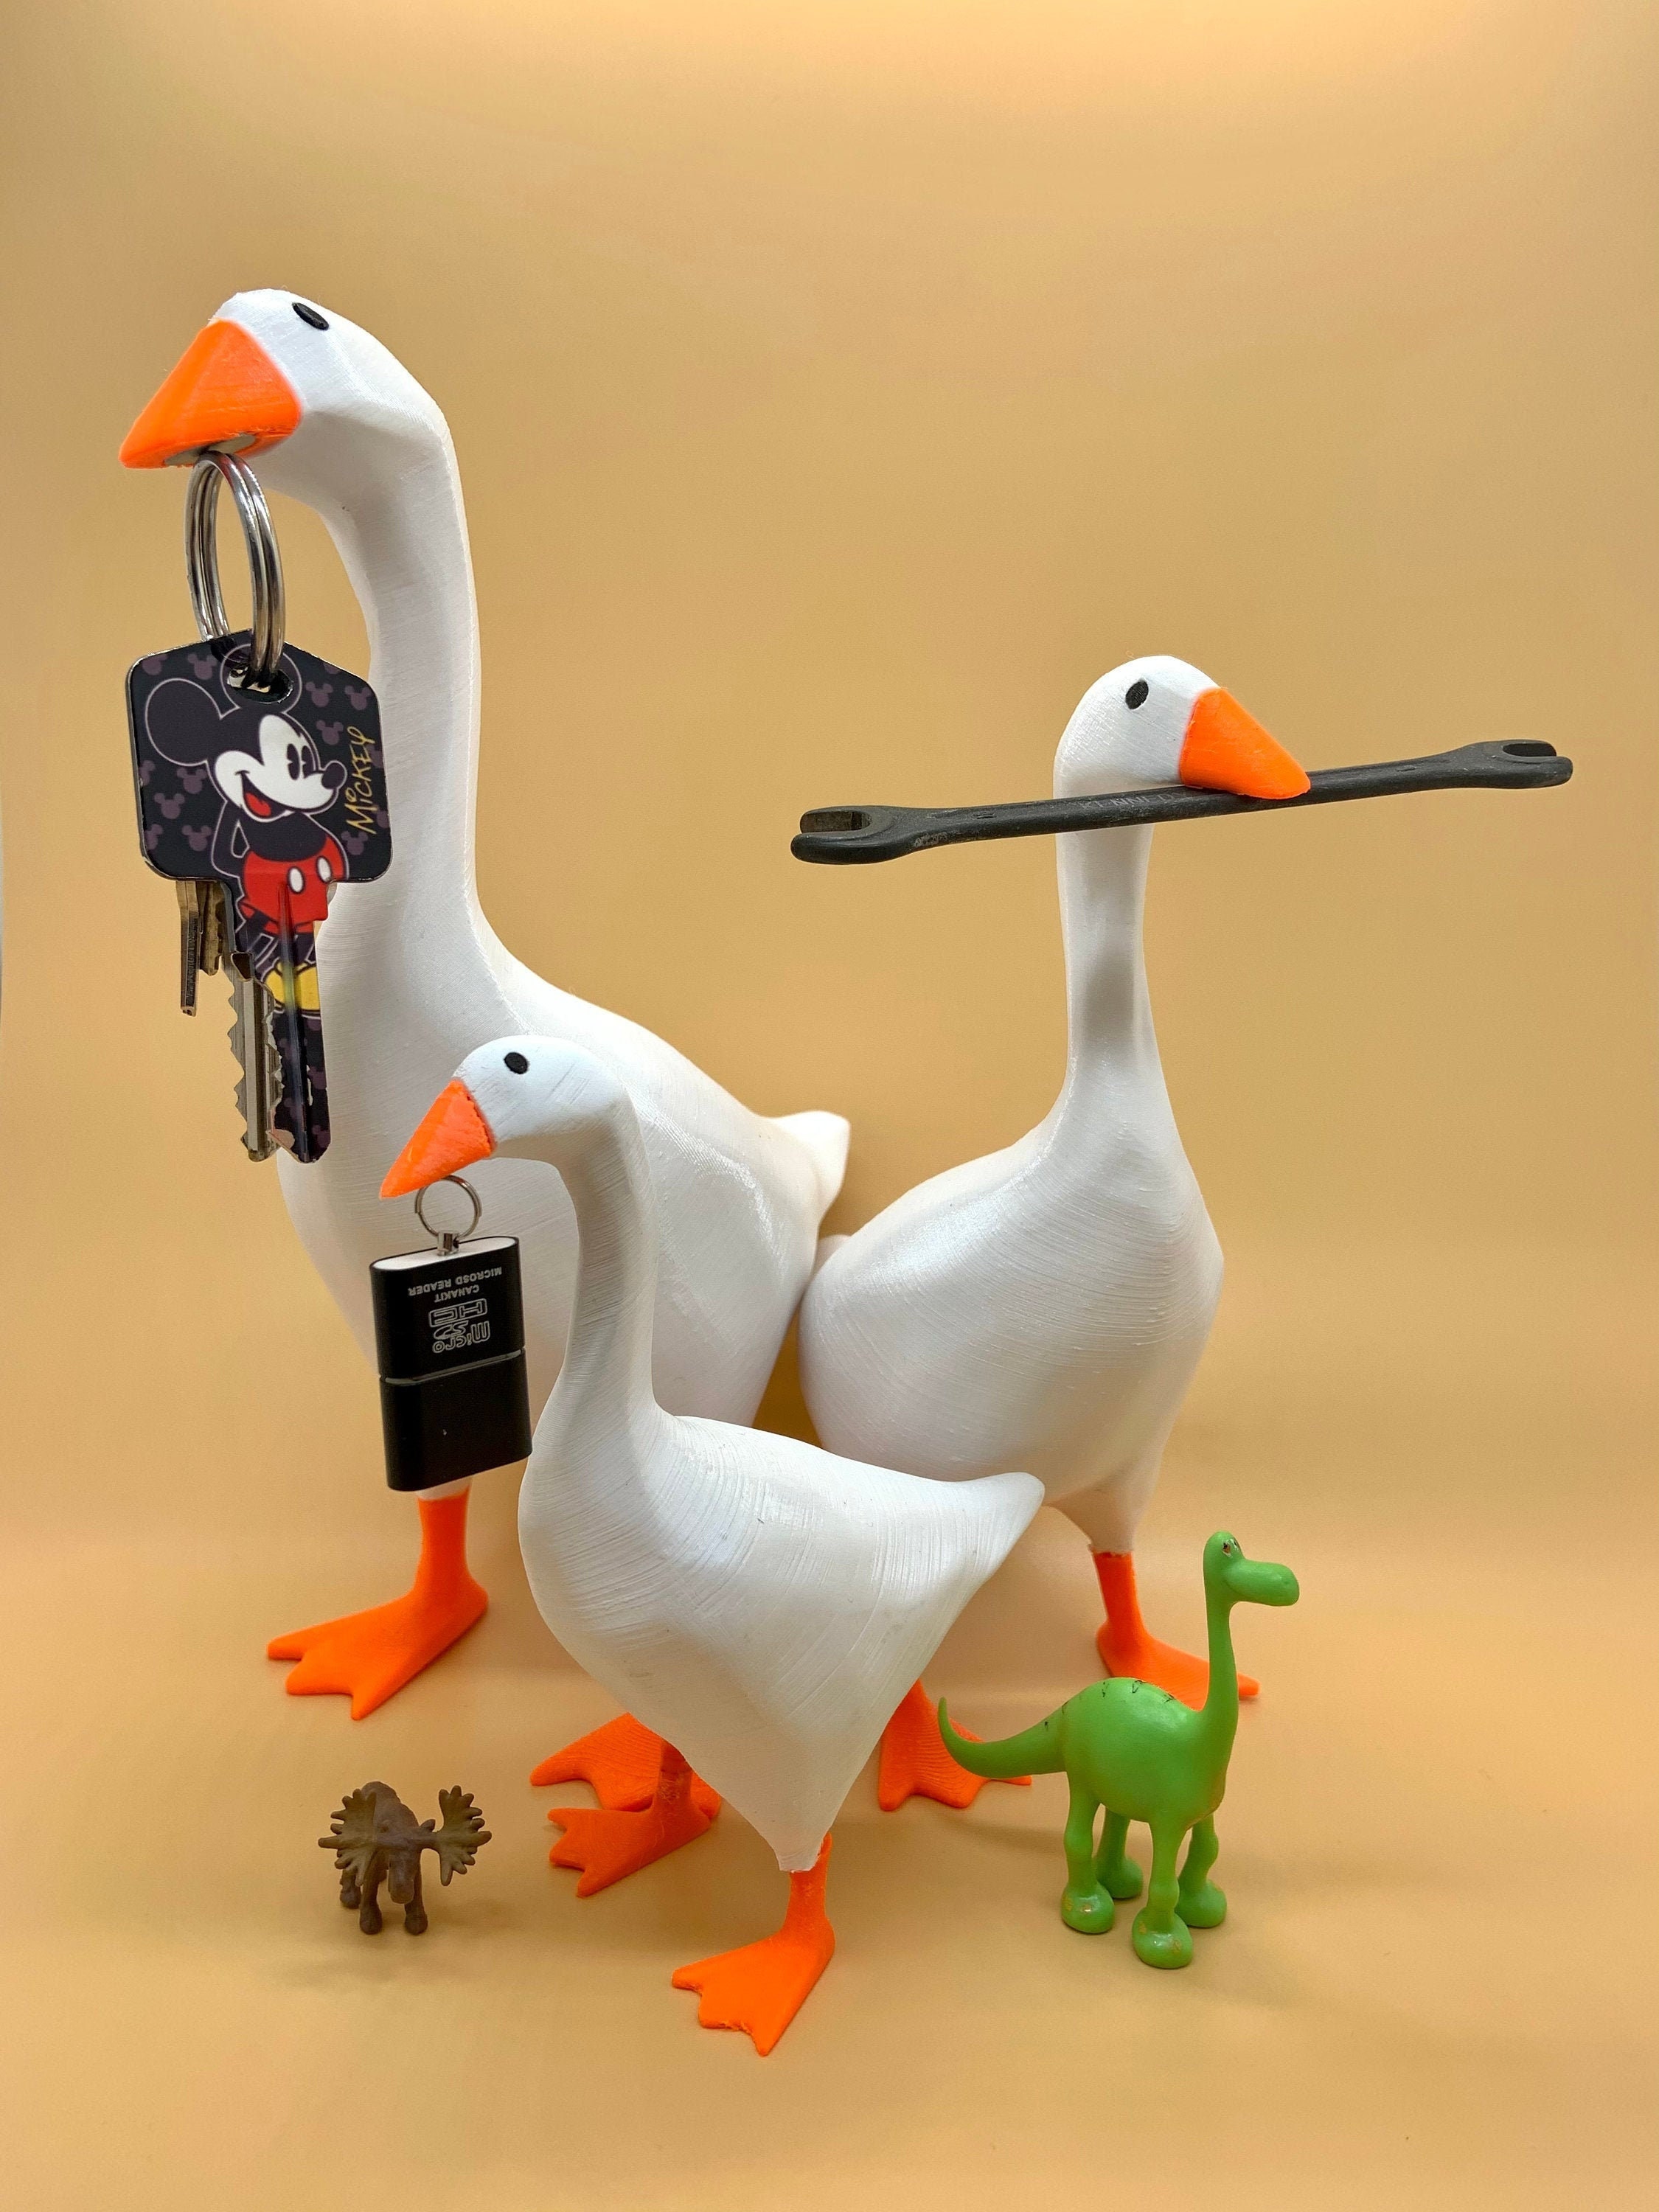 ShareDeck  Untitled Goose Game